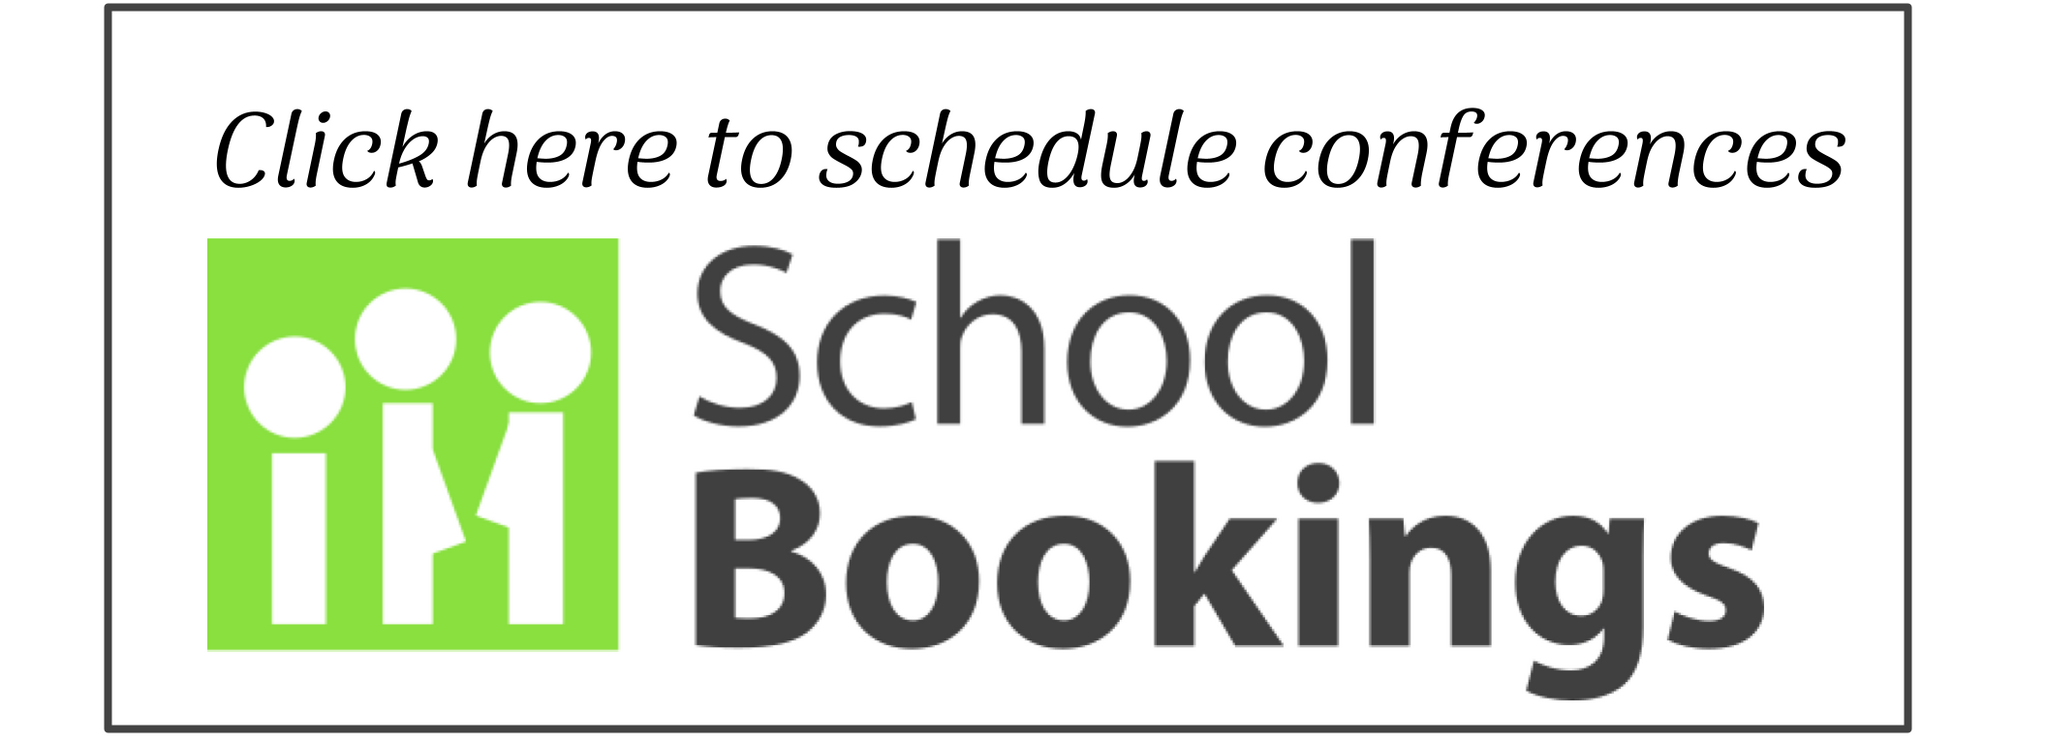 School Bookings Logo